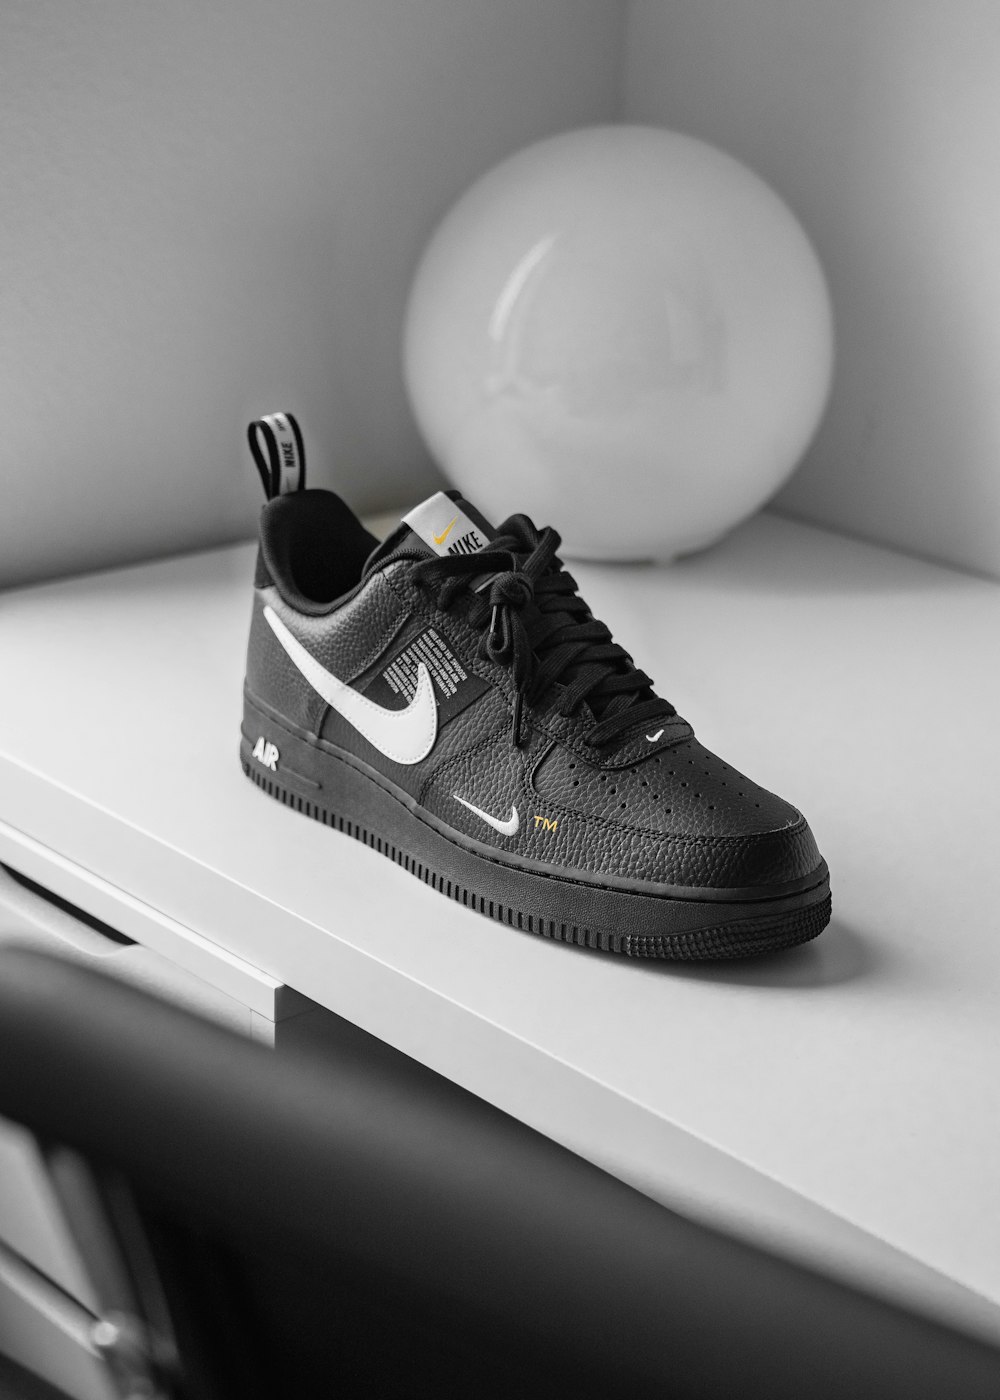 Foto zapatilla baja OFF WHITE X Nike Air Force 1 sin emparejar – Imagen  Zapatos gratis en Unsplash